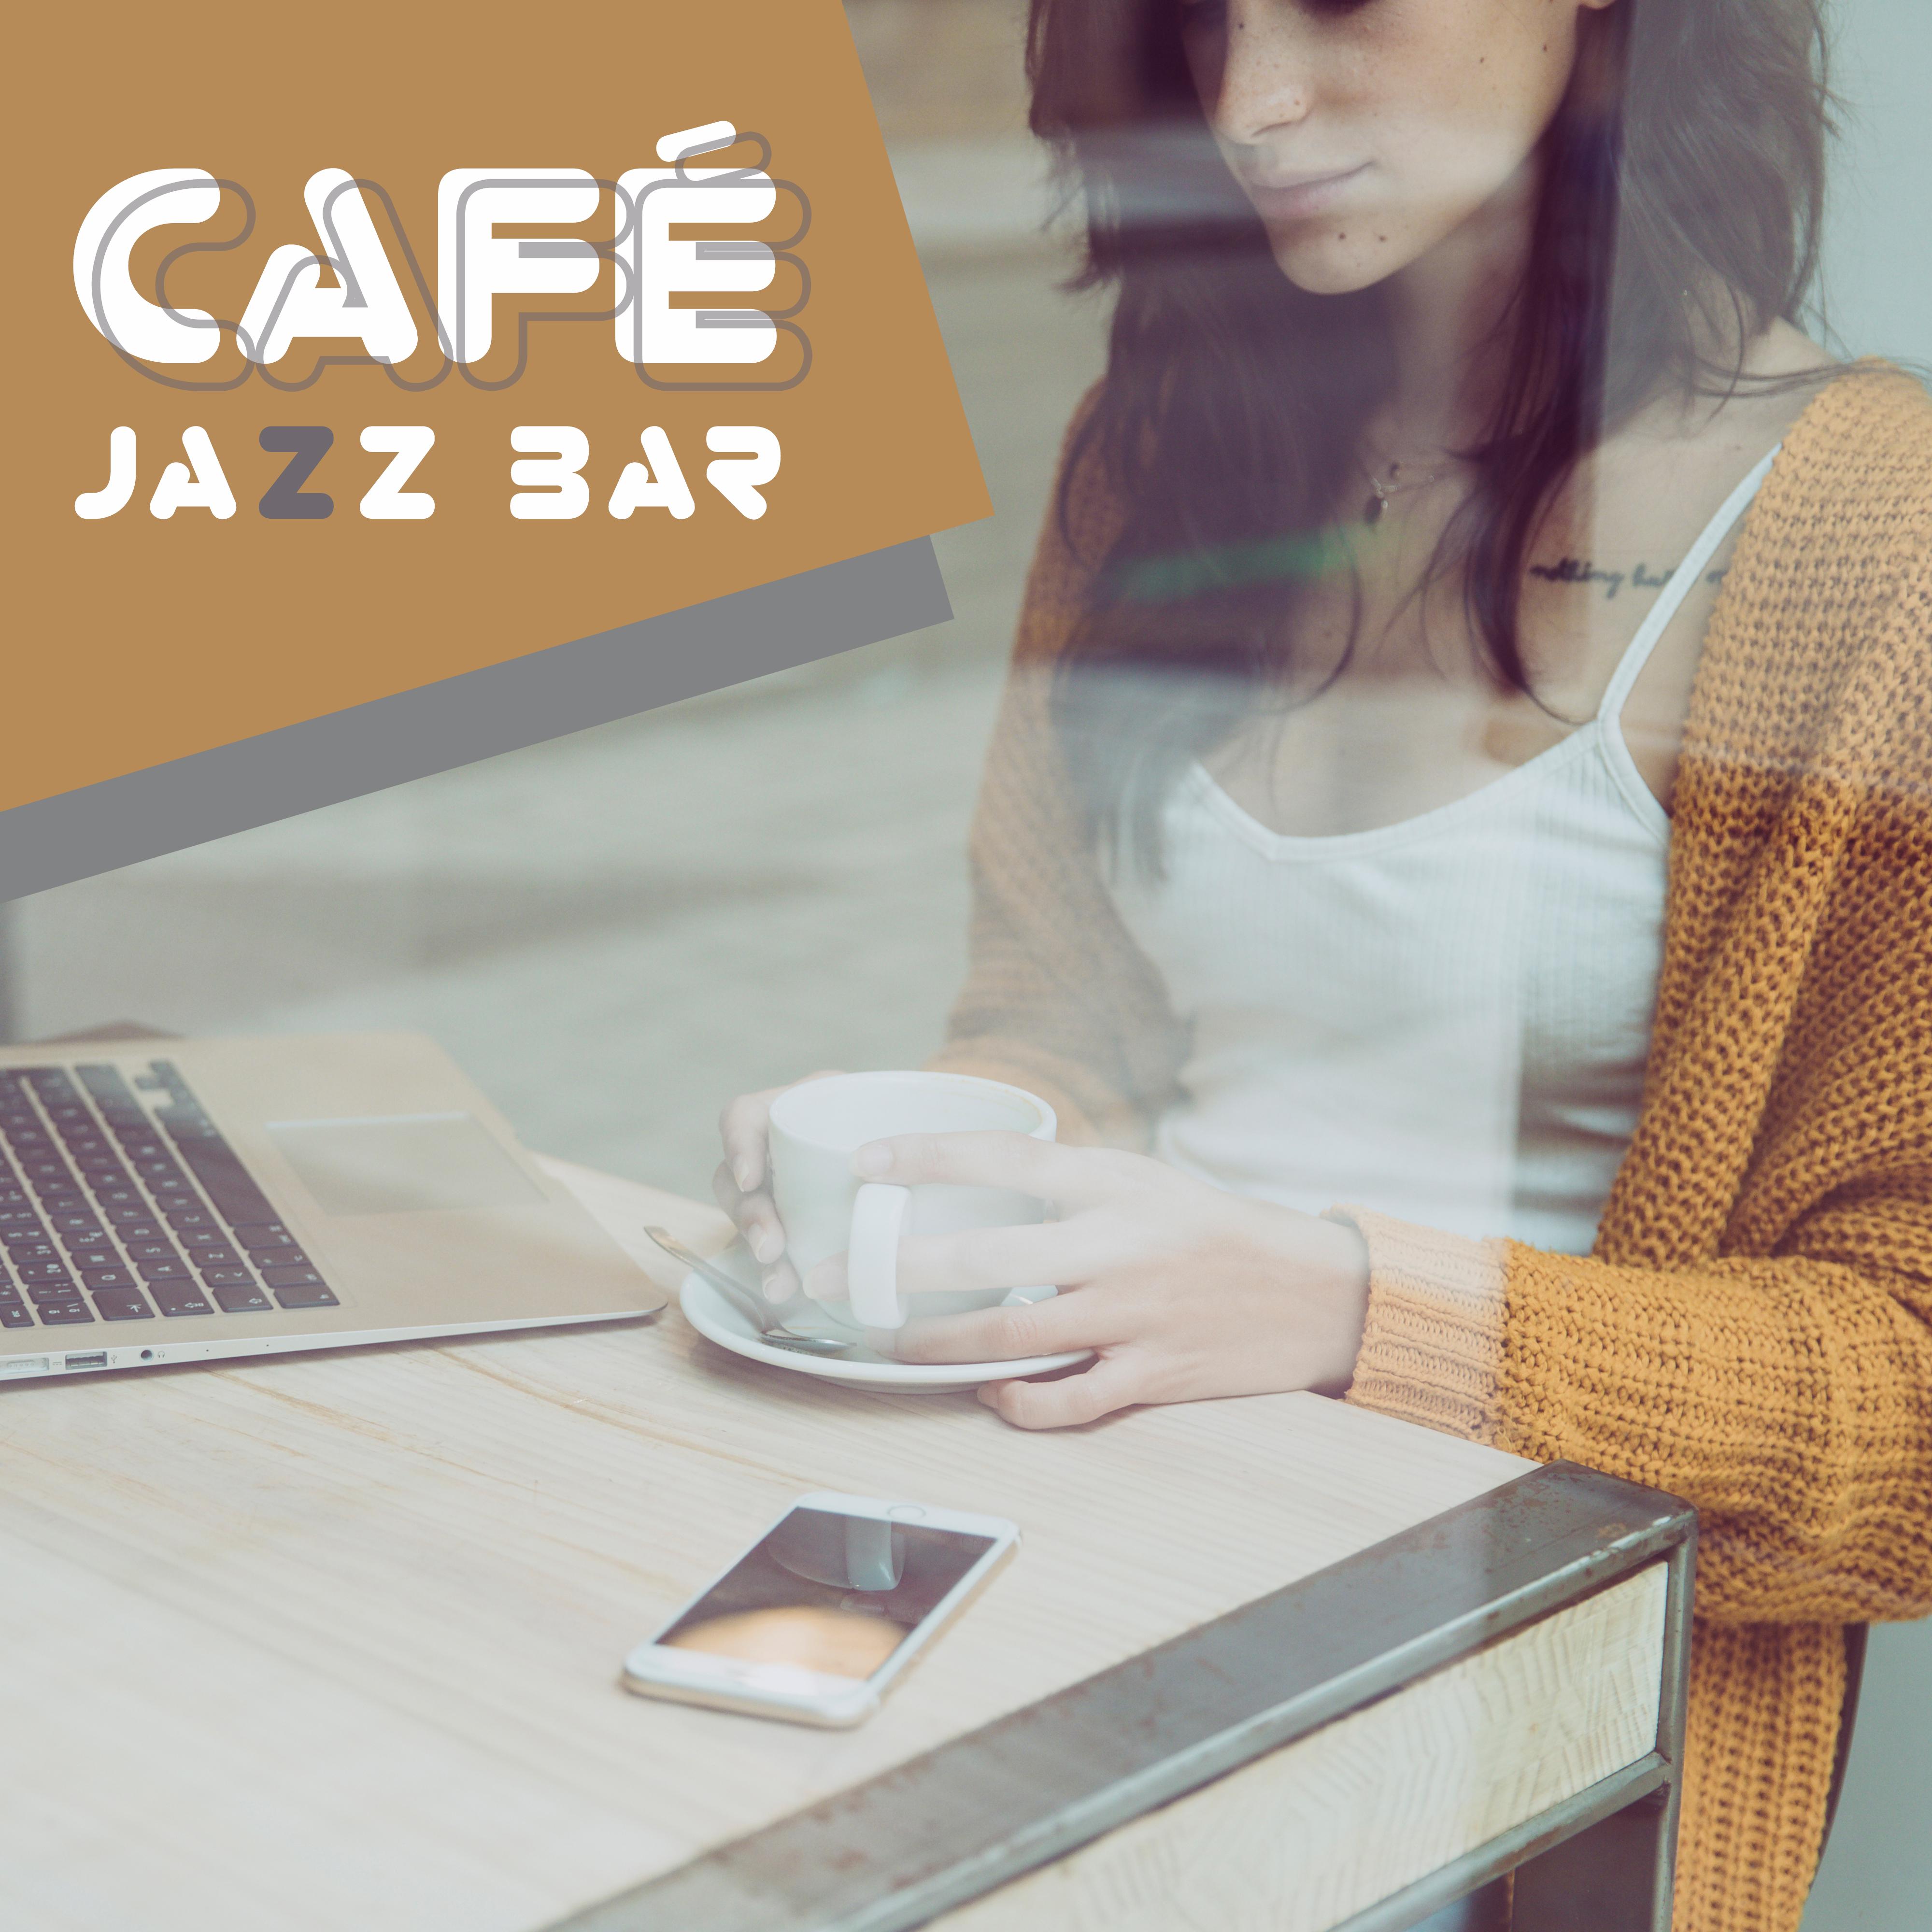 Cafe Jazz Bar